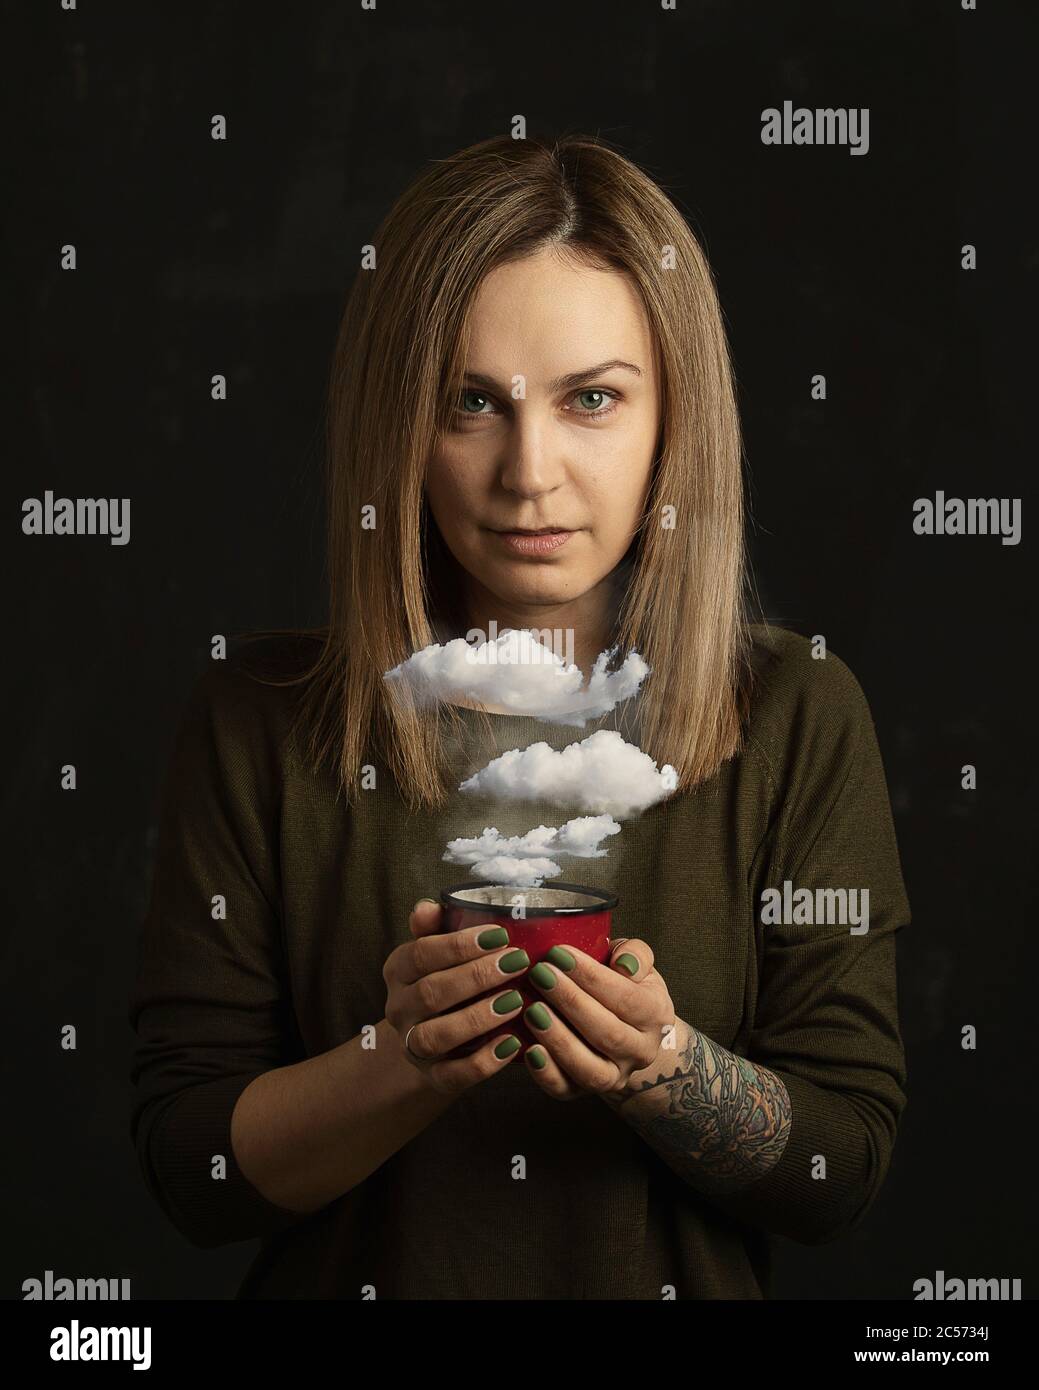 Portrait Frau hält Kaffee Tasse mit Wolken Stockfoto